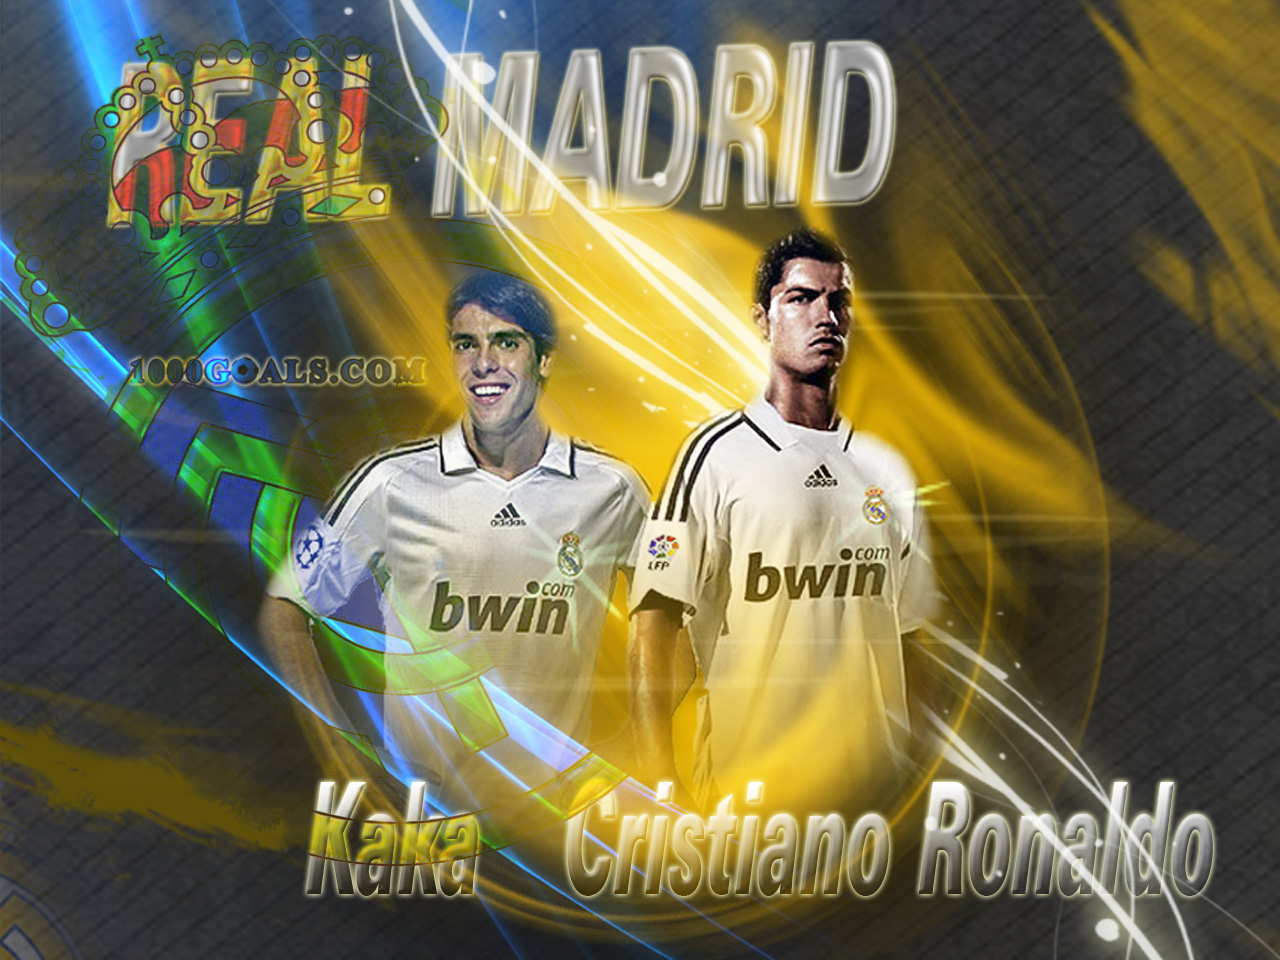 https://blogger.googleusercontent.com/img/b/R29vZ2xl/AVvXsEhh9OzHtMjqbyaX6ZP1XLMRu4QHoHMF4YI6bLLs0sddEadleDYHTzwXxKhUr4tJ4SfFvXy4uoWO76hh3g2d4cbK1MPWSTsEaHBNM2uYEPN18Wv_4_HGuG1acgbYnKVJzrUm5W3LzM8KnHI/s1600/Ricardo_Kaka-Cristiano_Ronaldo-Real-Madrid-2011wallpaper.jpg